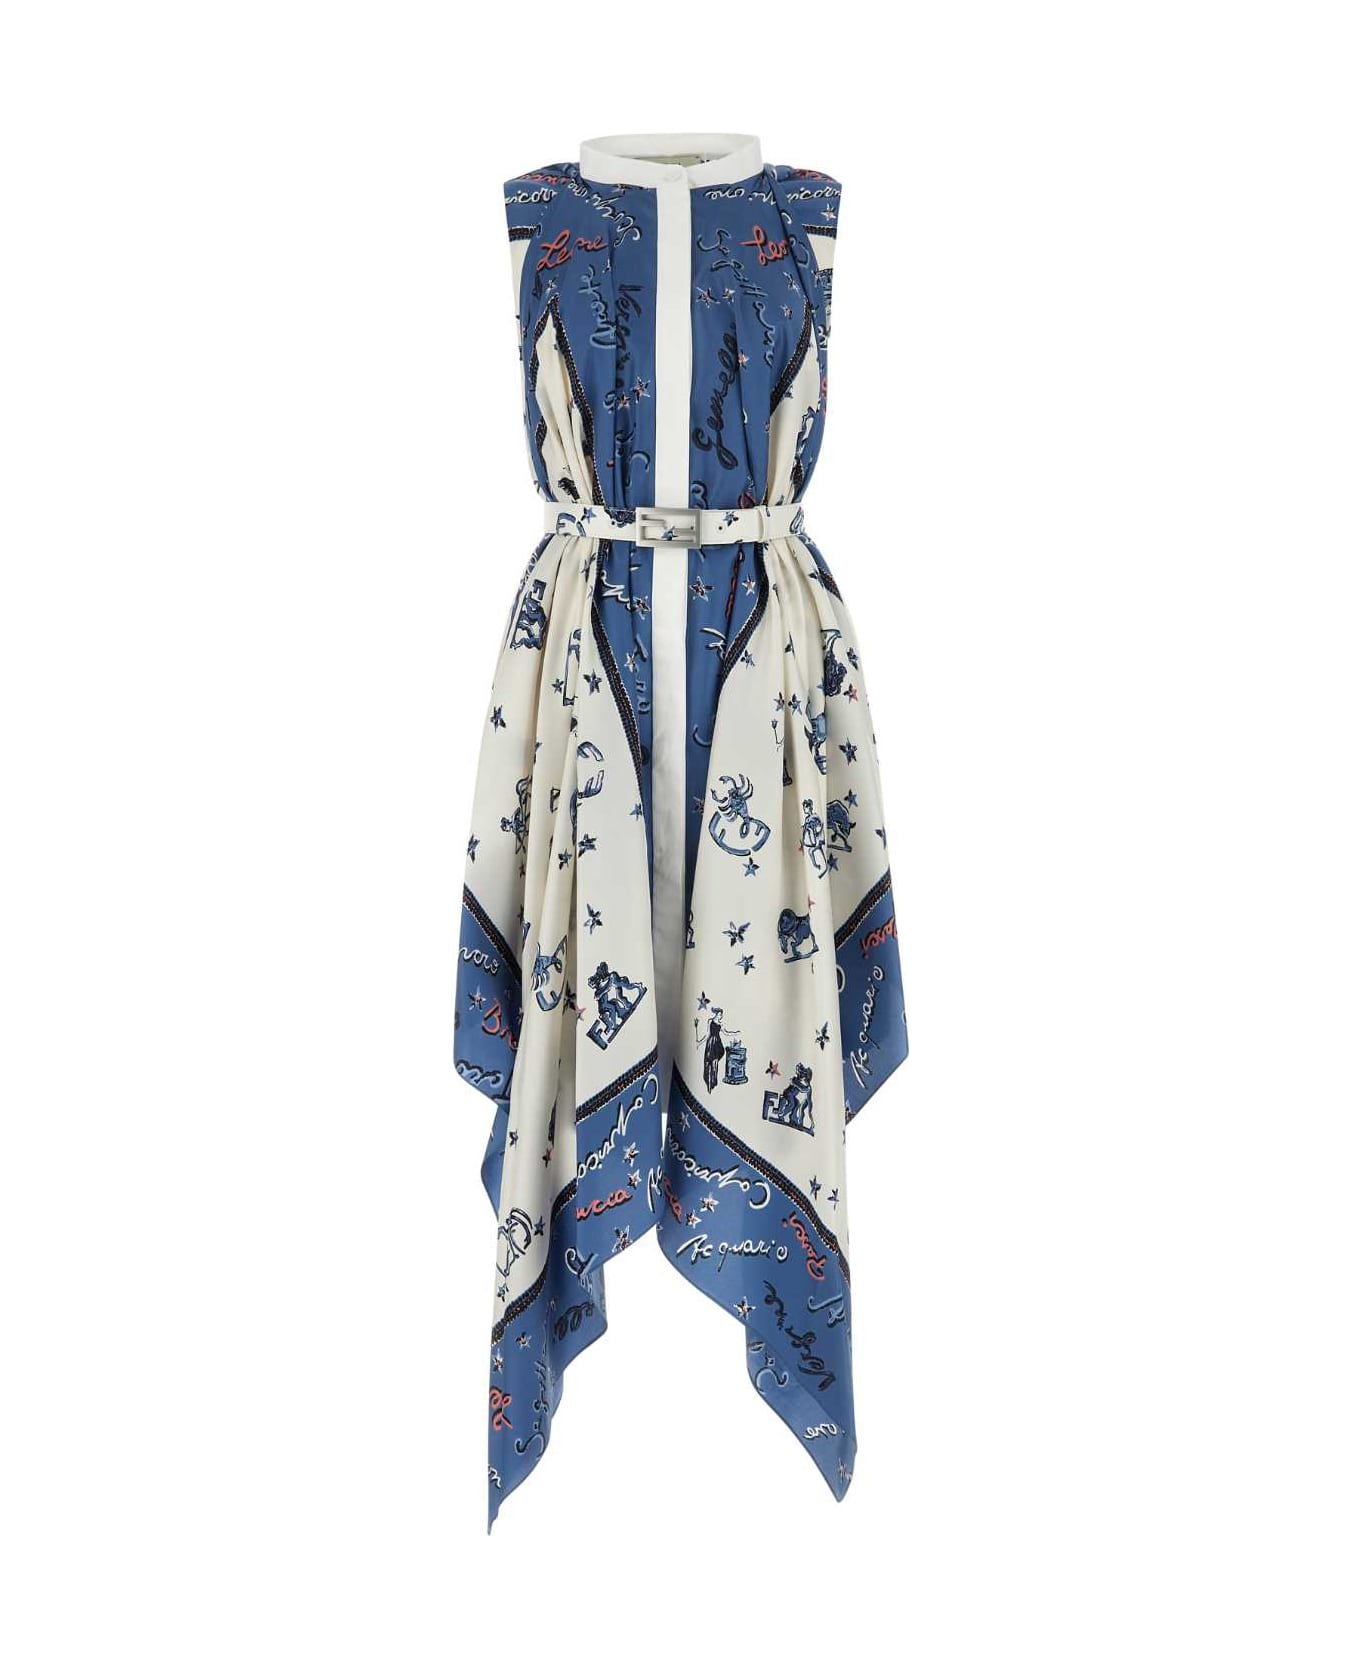 Fendi Printed Satin Dress - PERFECT